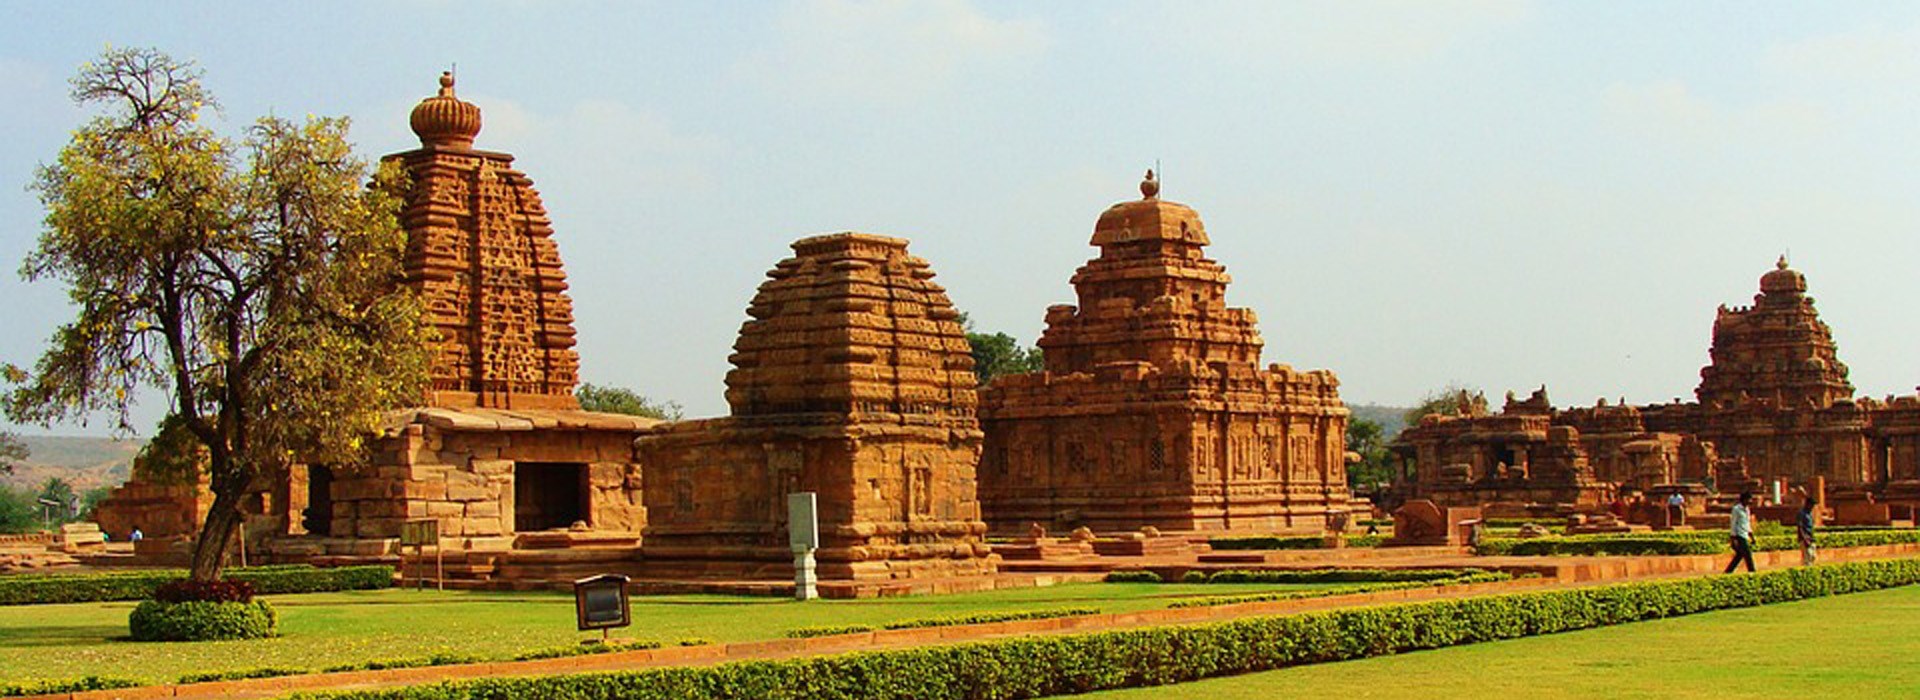 Visiter Le site de Pattadakal - Inde